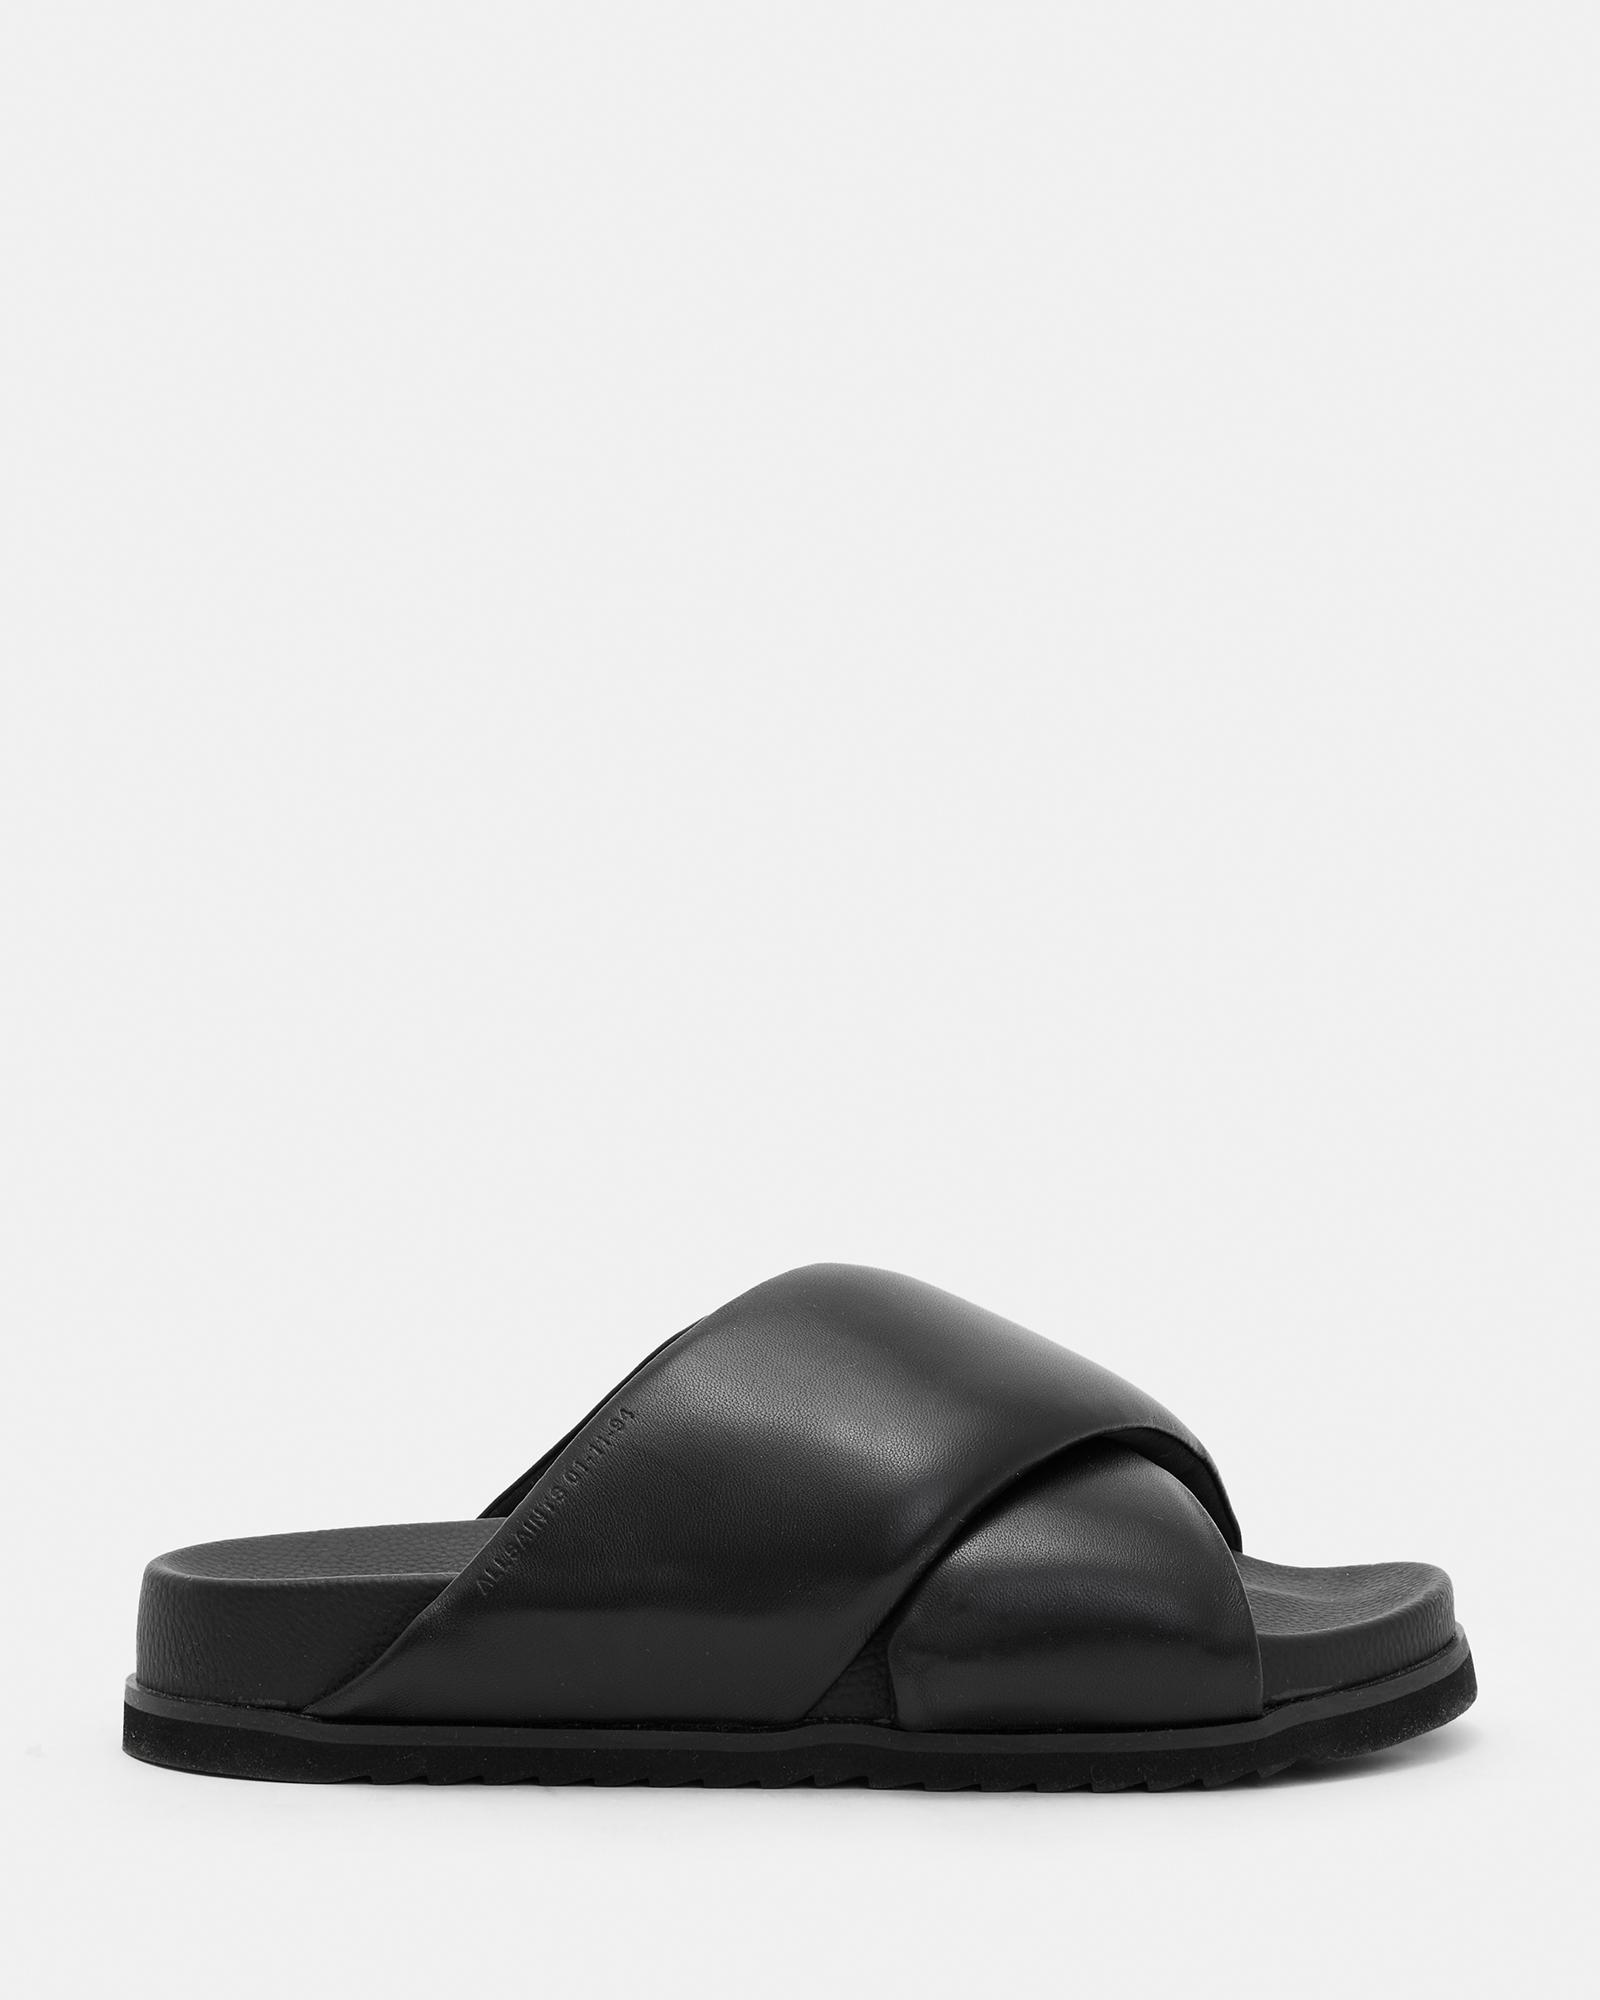 AllSaints Saki Crossover Leather Sandals in Black | Lyst